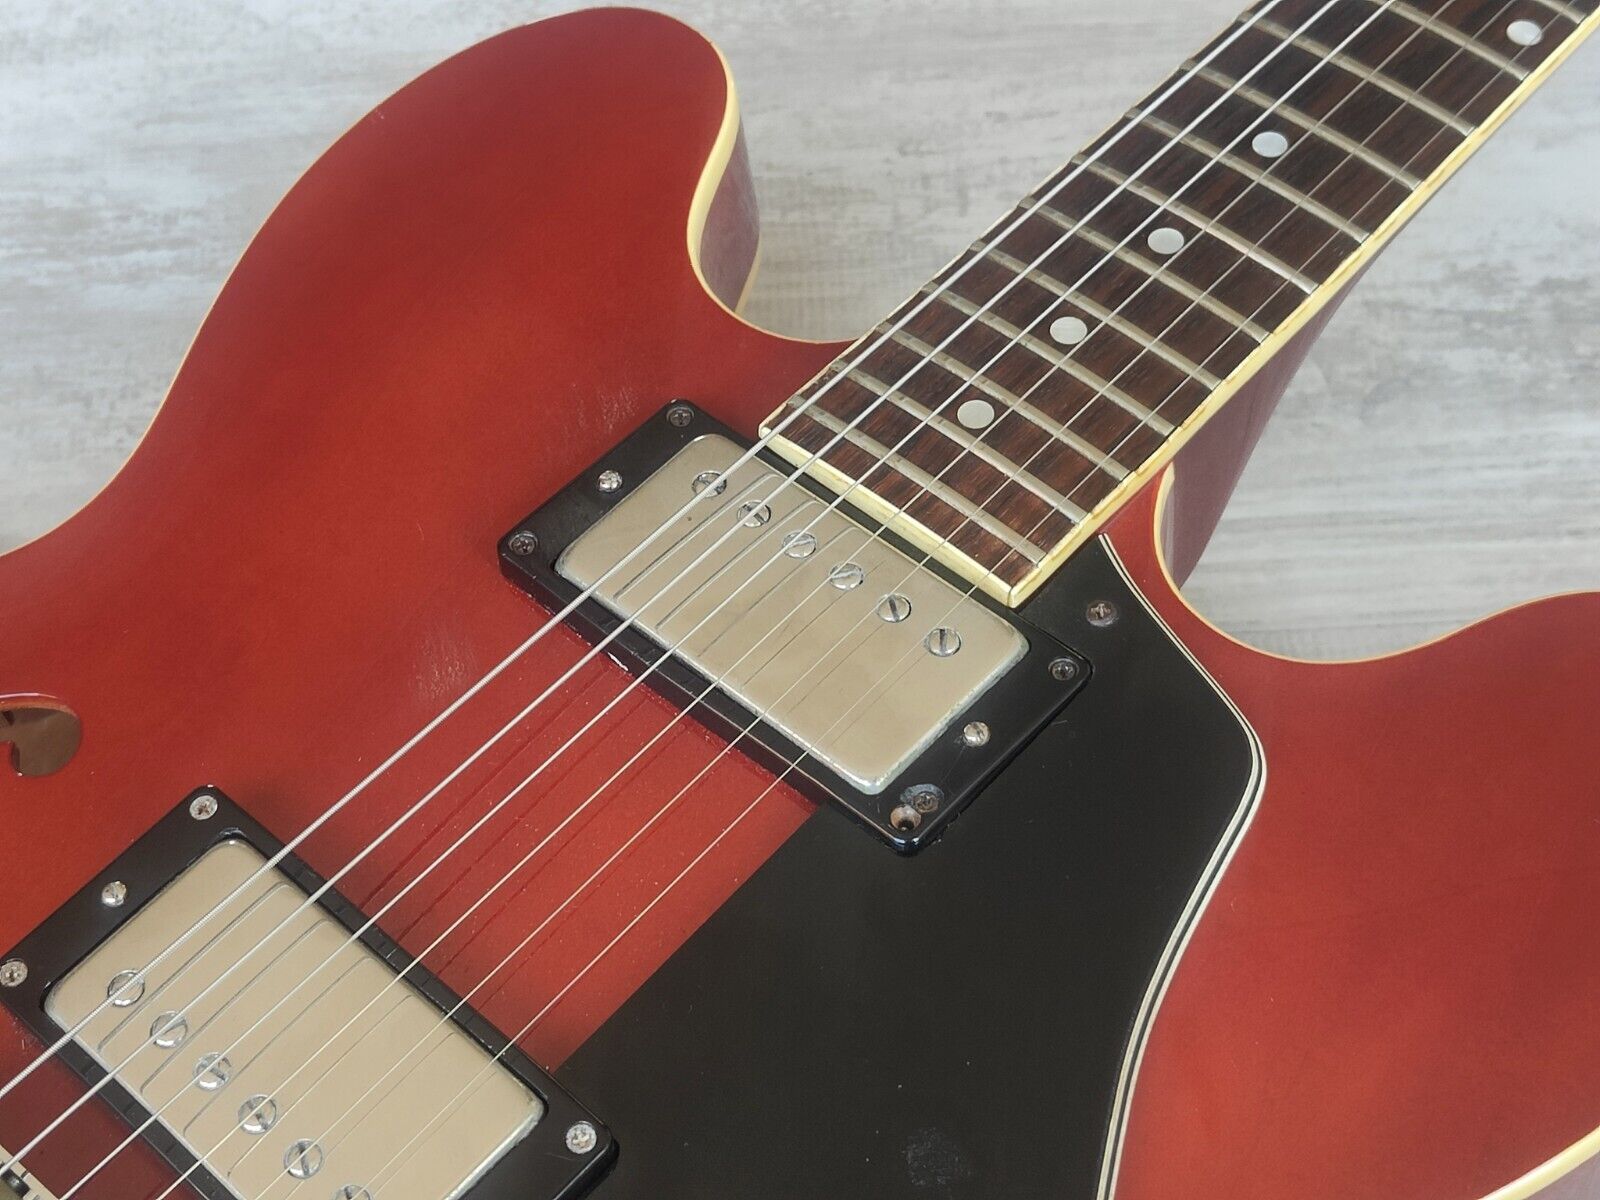 1988 Burny Japan RSA-70 Semi Hollowbody Electric Guitar (Cherry Red)